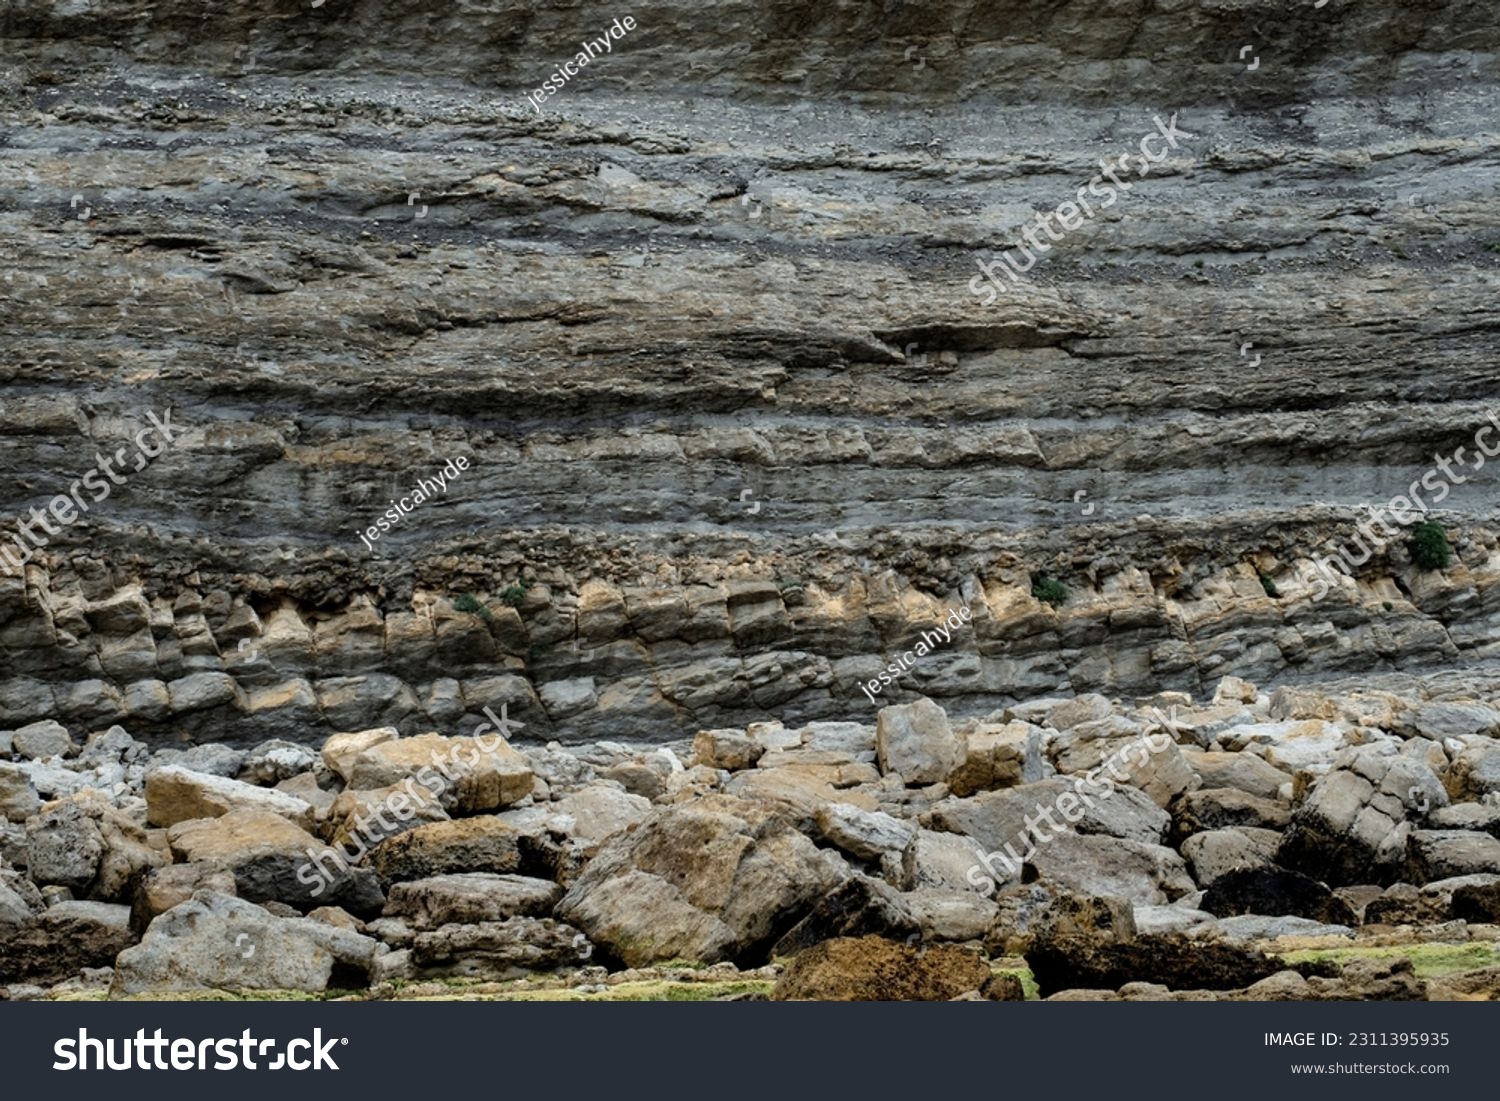 Rhythmic stratification of sedimentary rocks deposited in horizontal layers. Broken Coast of Liencres, Cantabria, Spain.  #2311395935